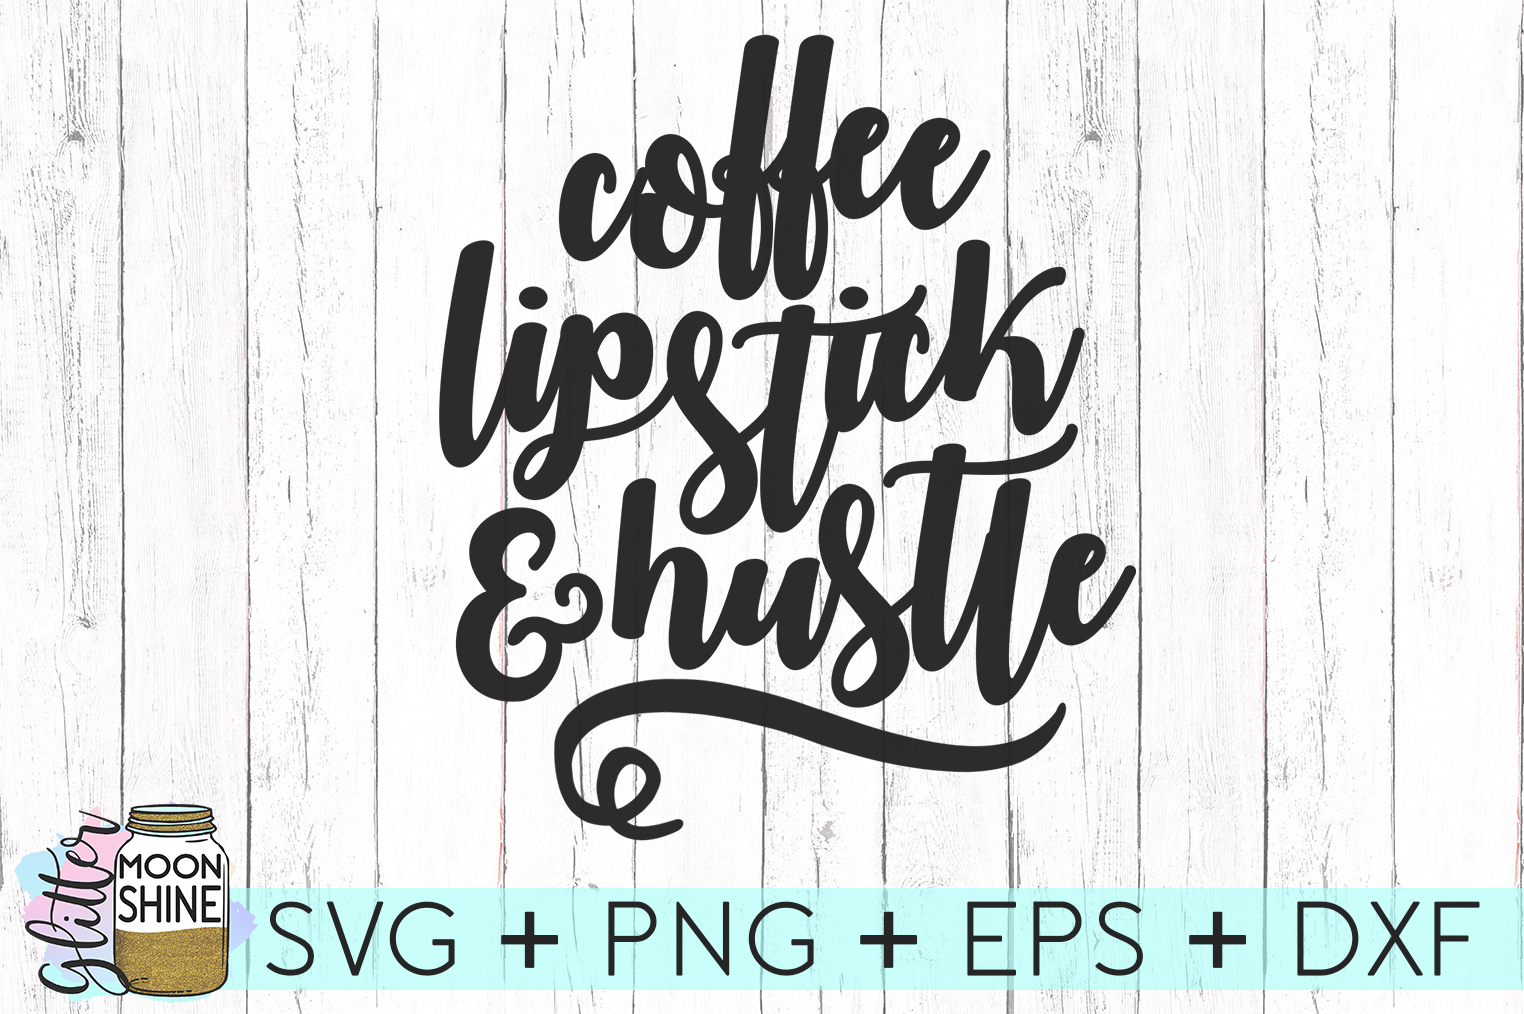 Free Free 100 Coffee Mascara Hustle Svg SVG PNG EPS DXF File